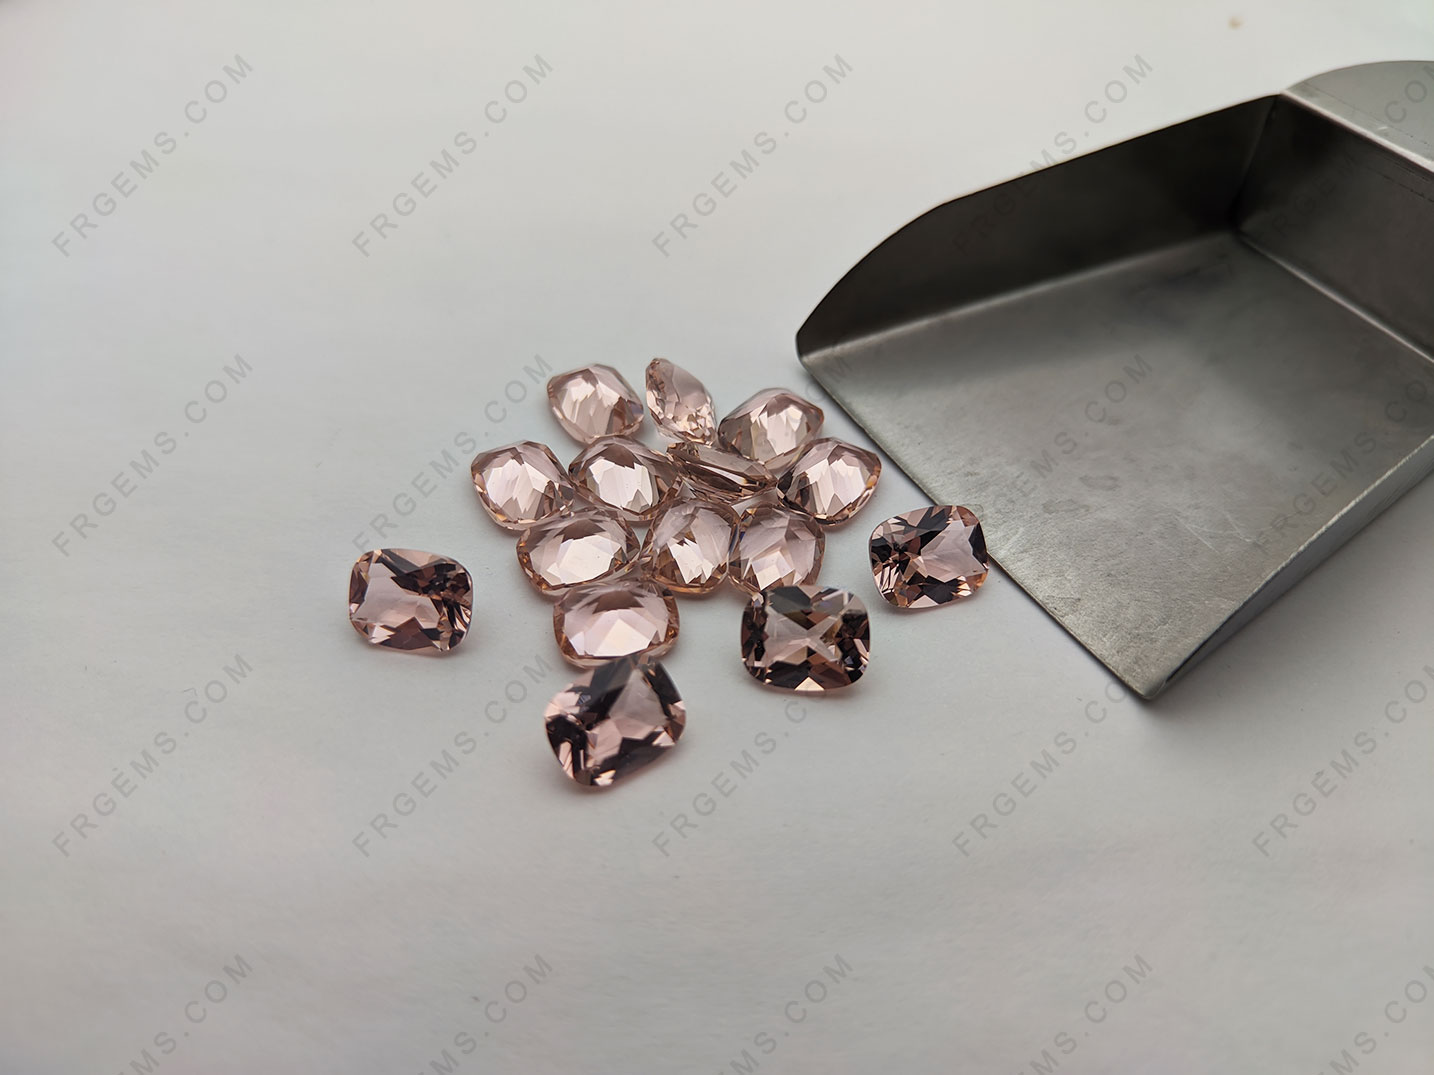 Loose Nano Crystal Morganite Pink peach color elongated cushion 10x8mm faceted cut Gemstones